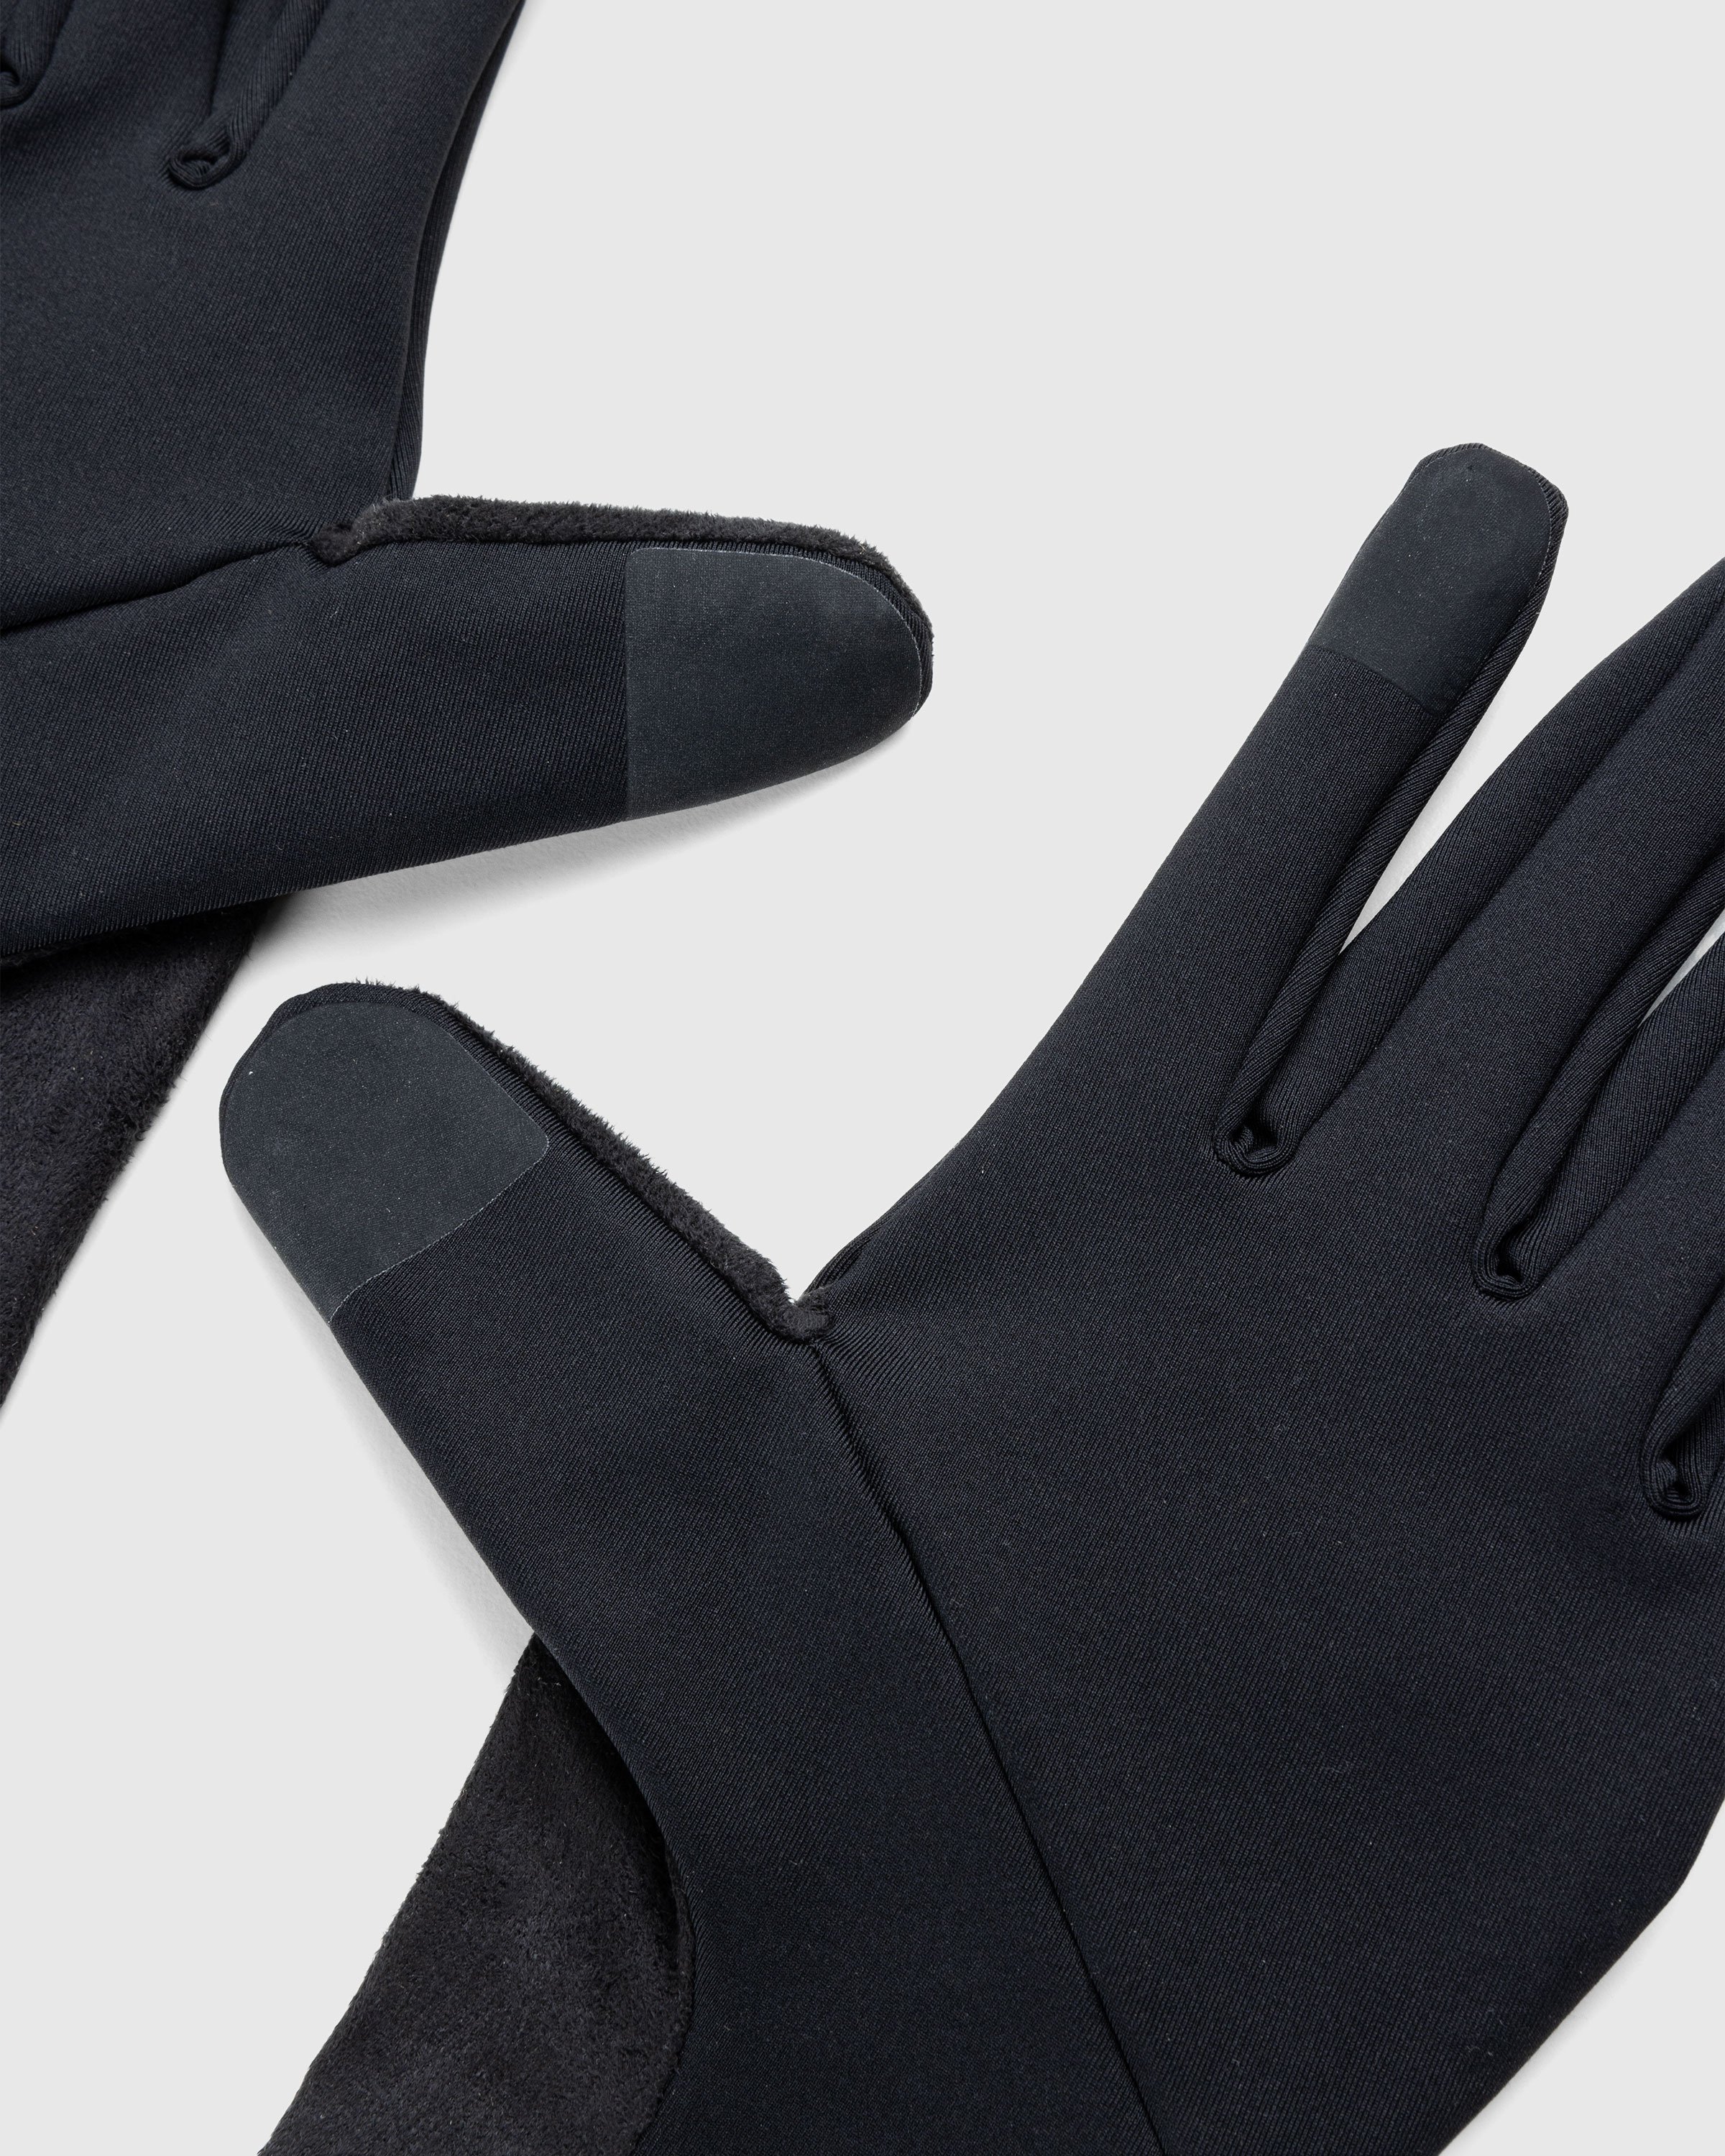 On - Weather Glove Black - Accessories - Black - Image 5